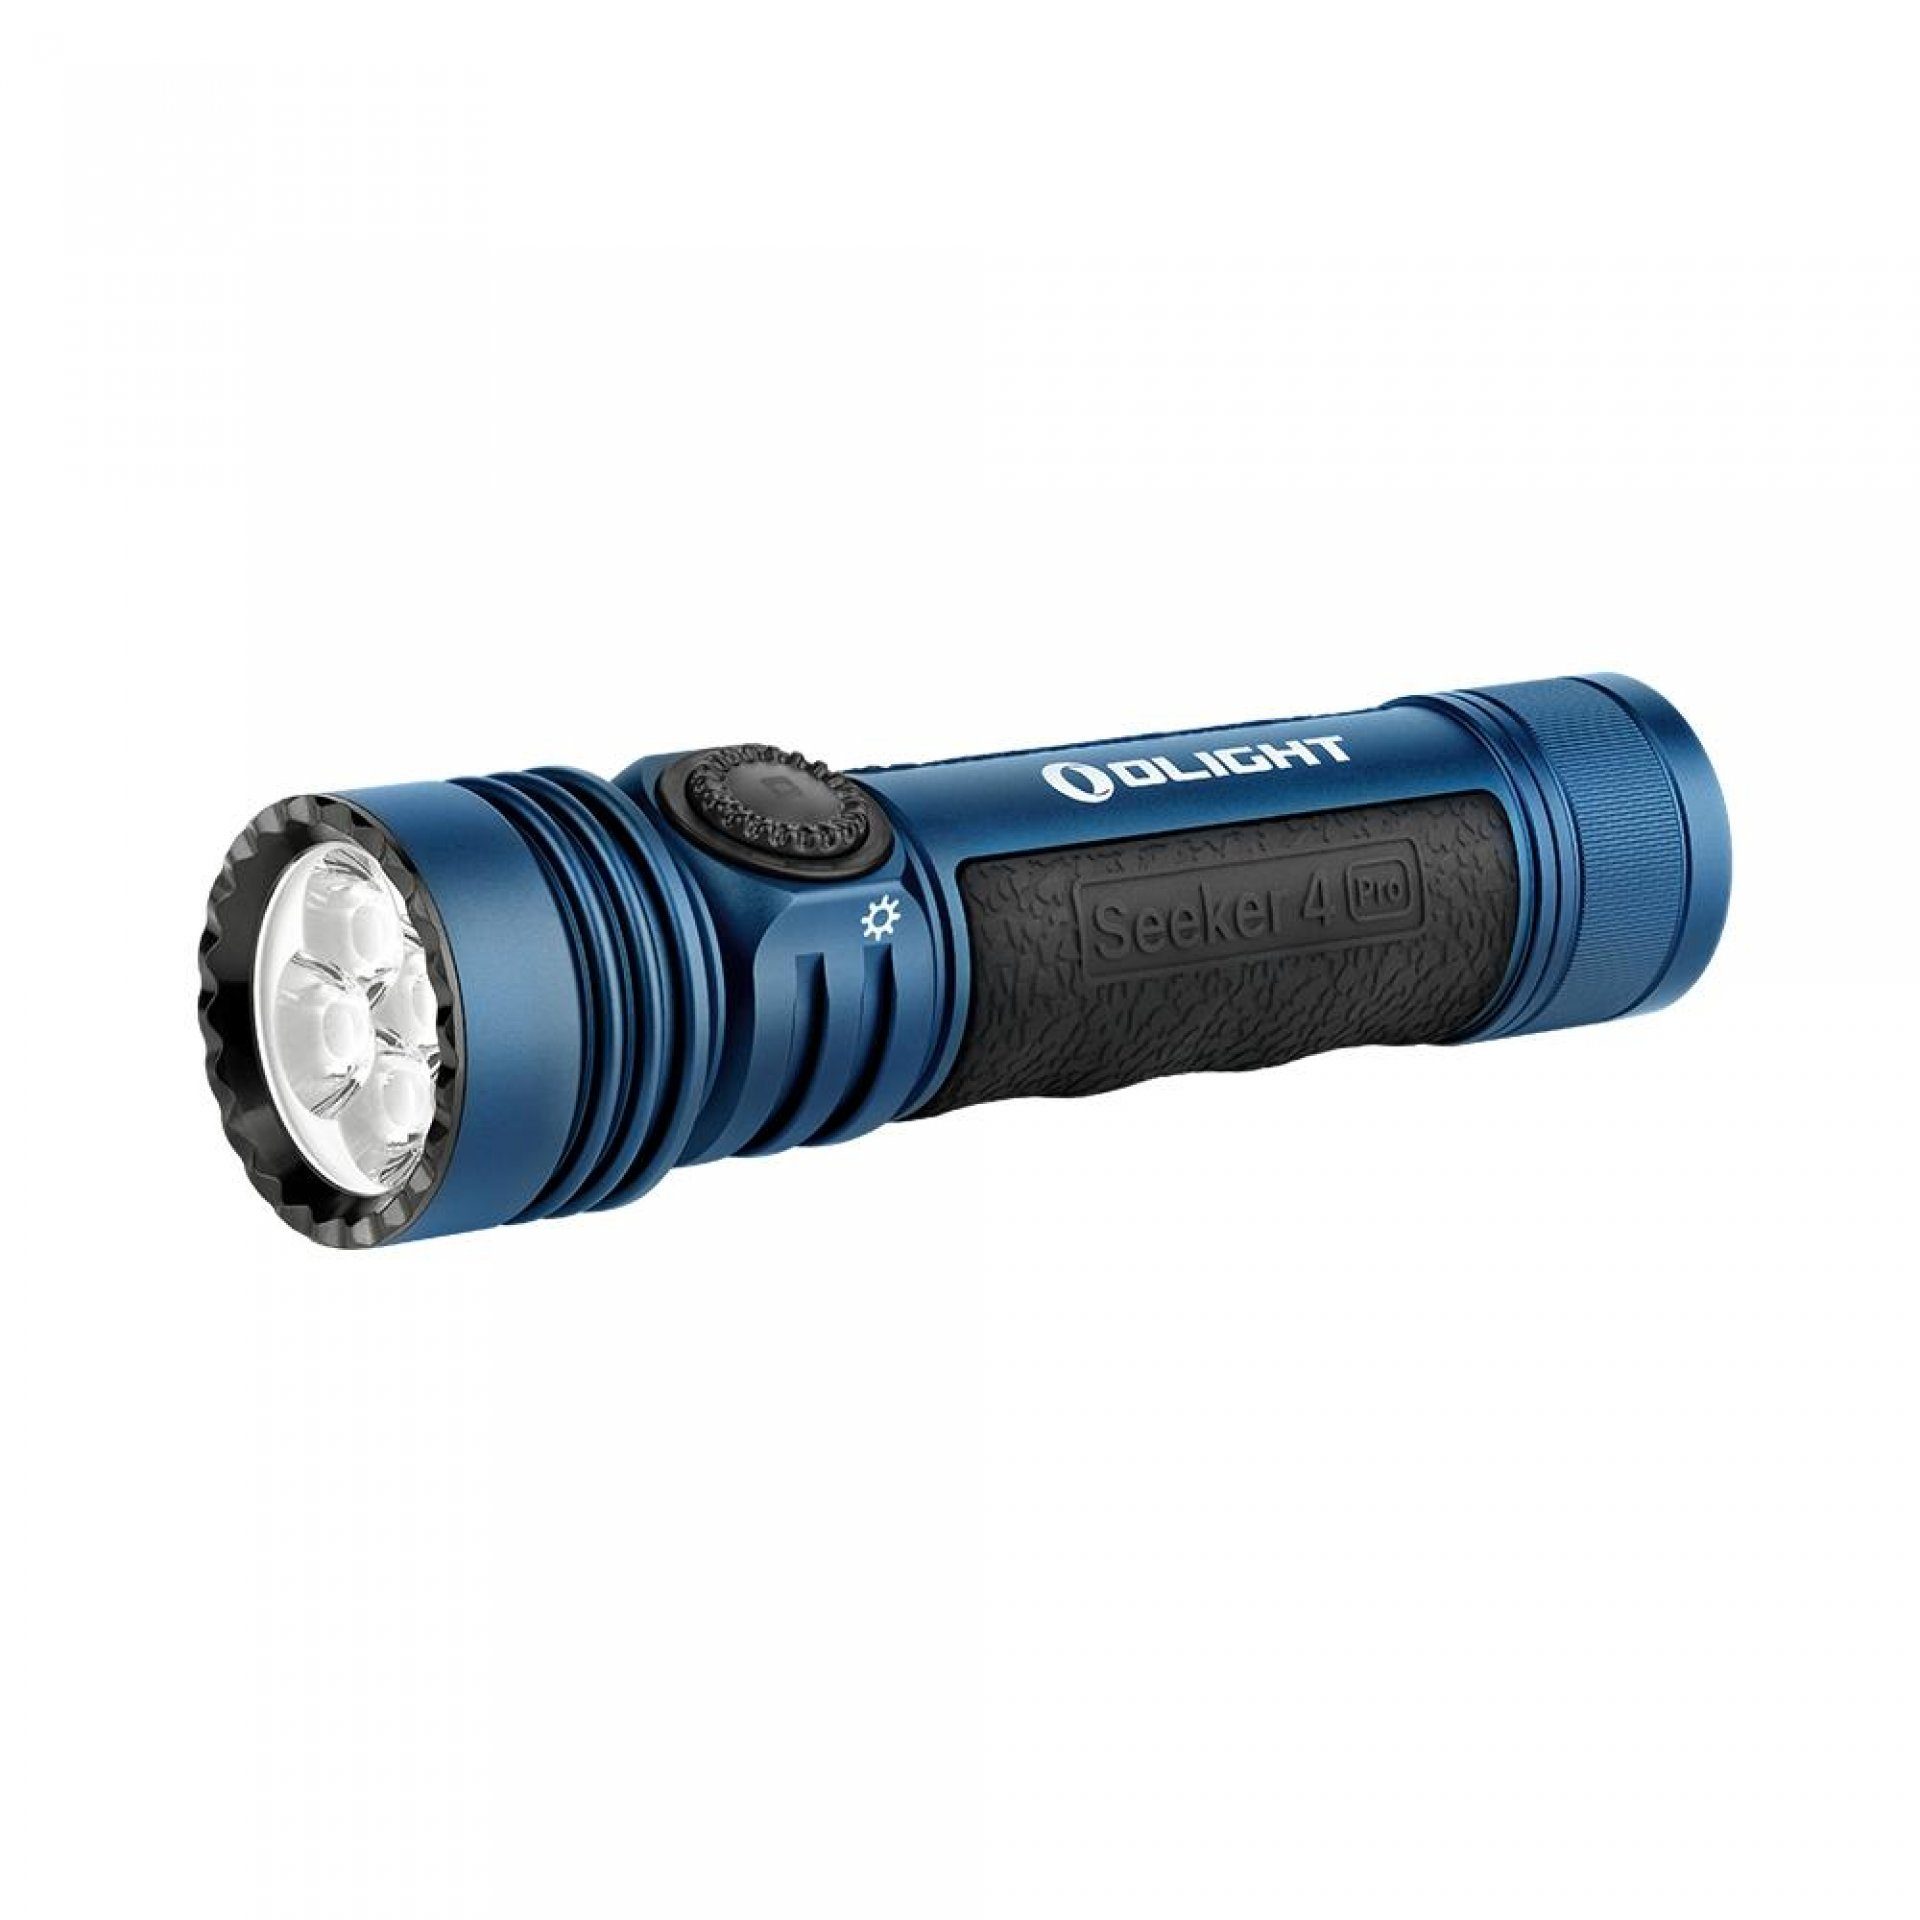 Taschenlampe 4 Seeker Olight Meter Lumen Mitternachtsblau LED OLIGHT 260 4600 Pro Taschenlampe